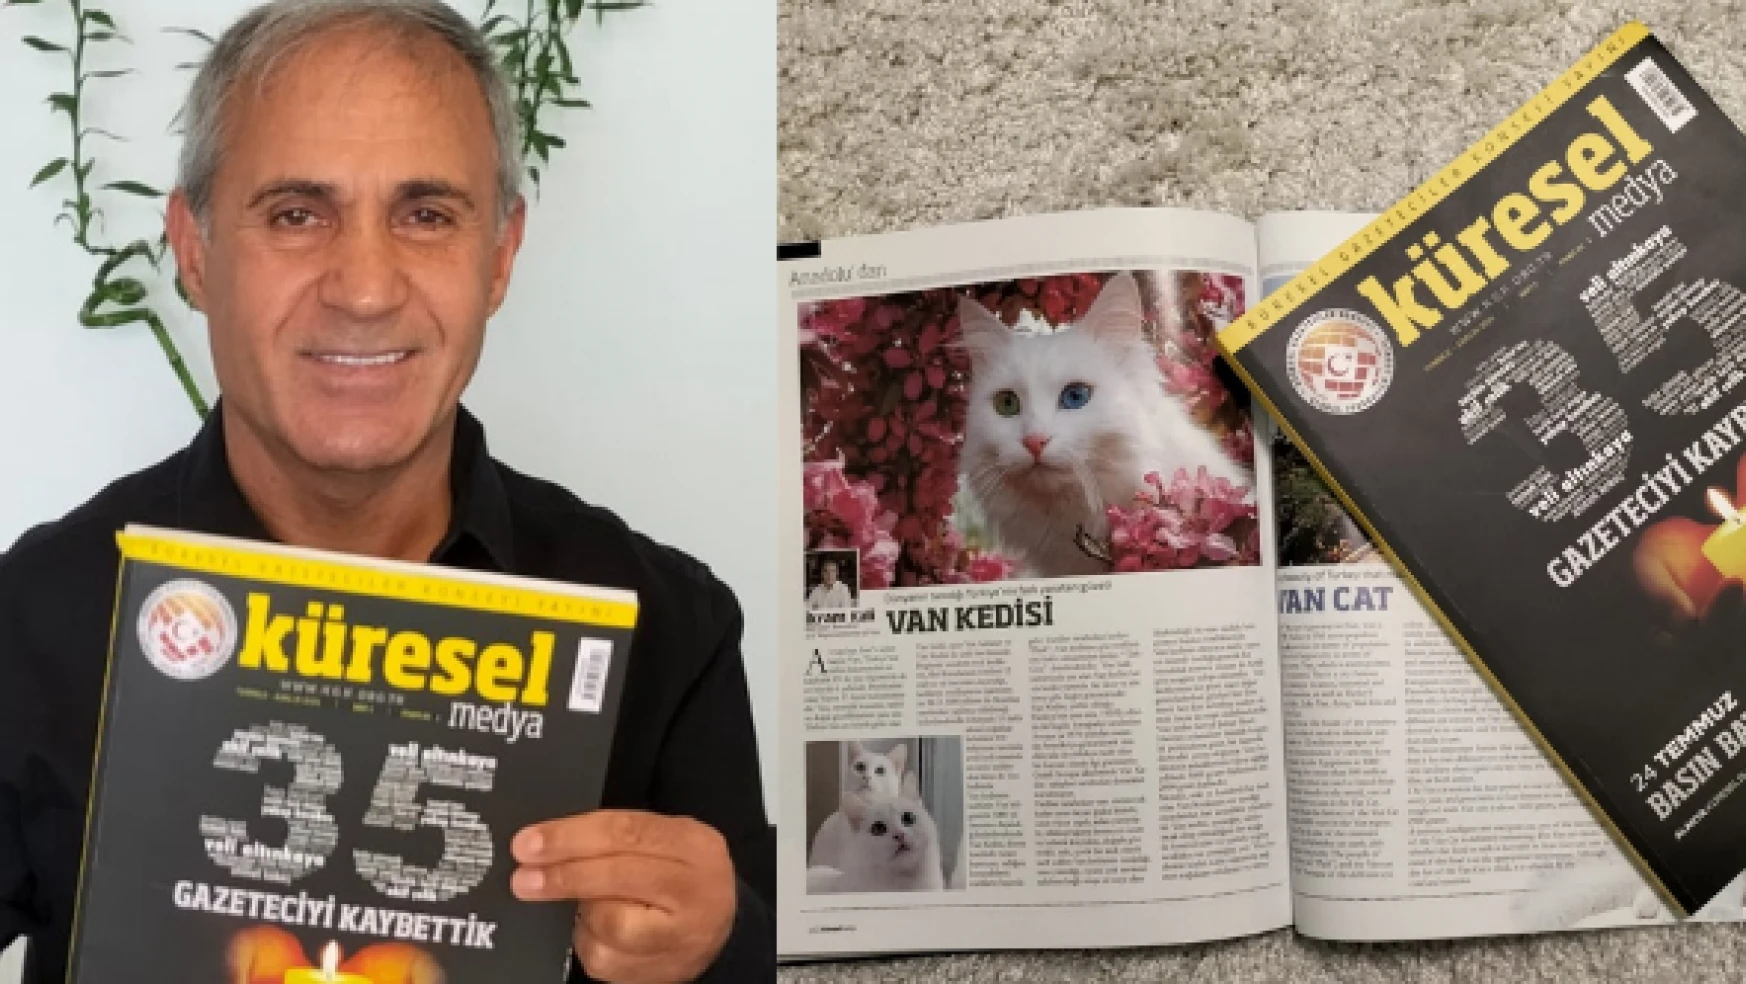 Van kedisi Küresel Medya Dergisi'ne konu oldu